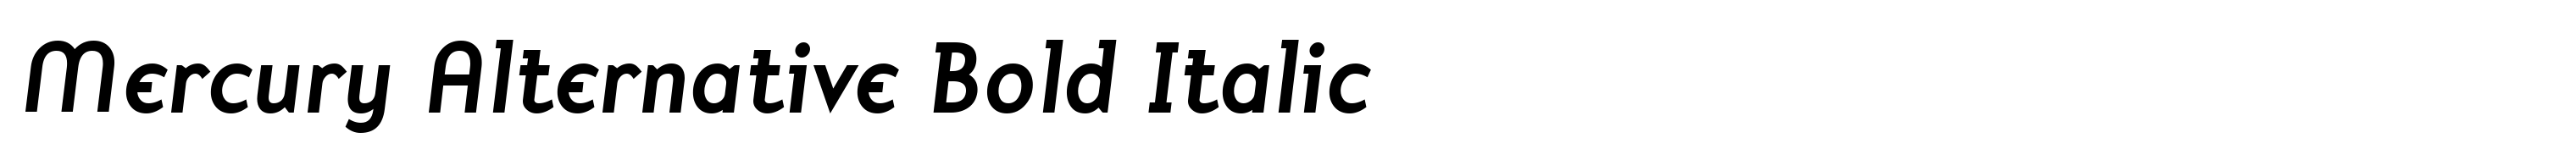 Merkur Alternative Bold Italic